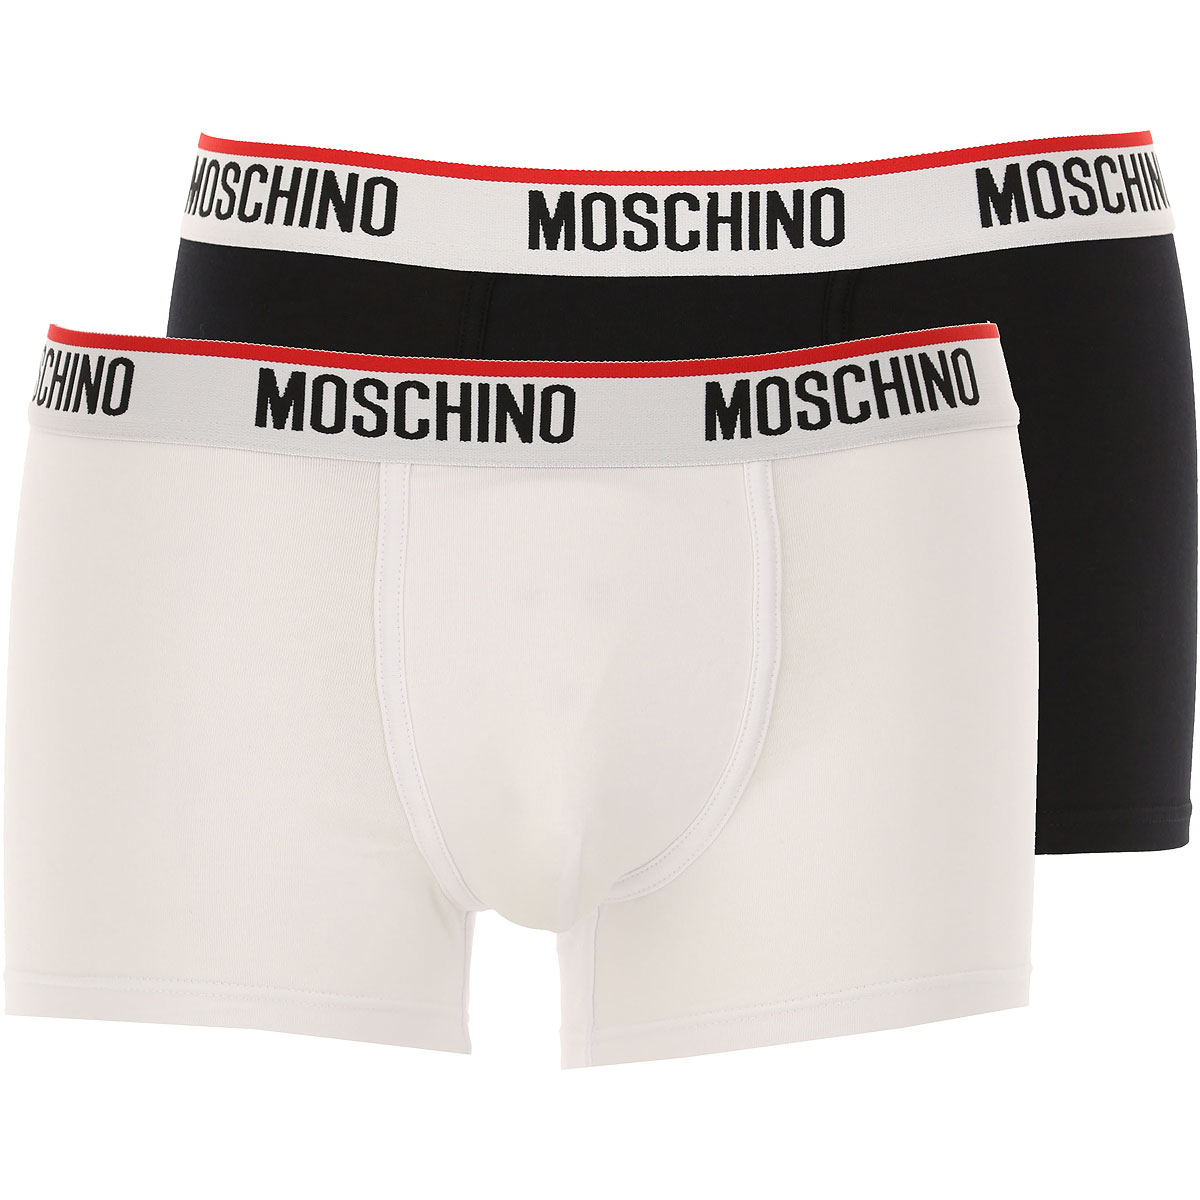 Moschino Underwear - Boxer for Man - White - 321V1 A139443000001